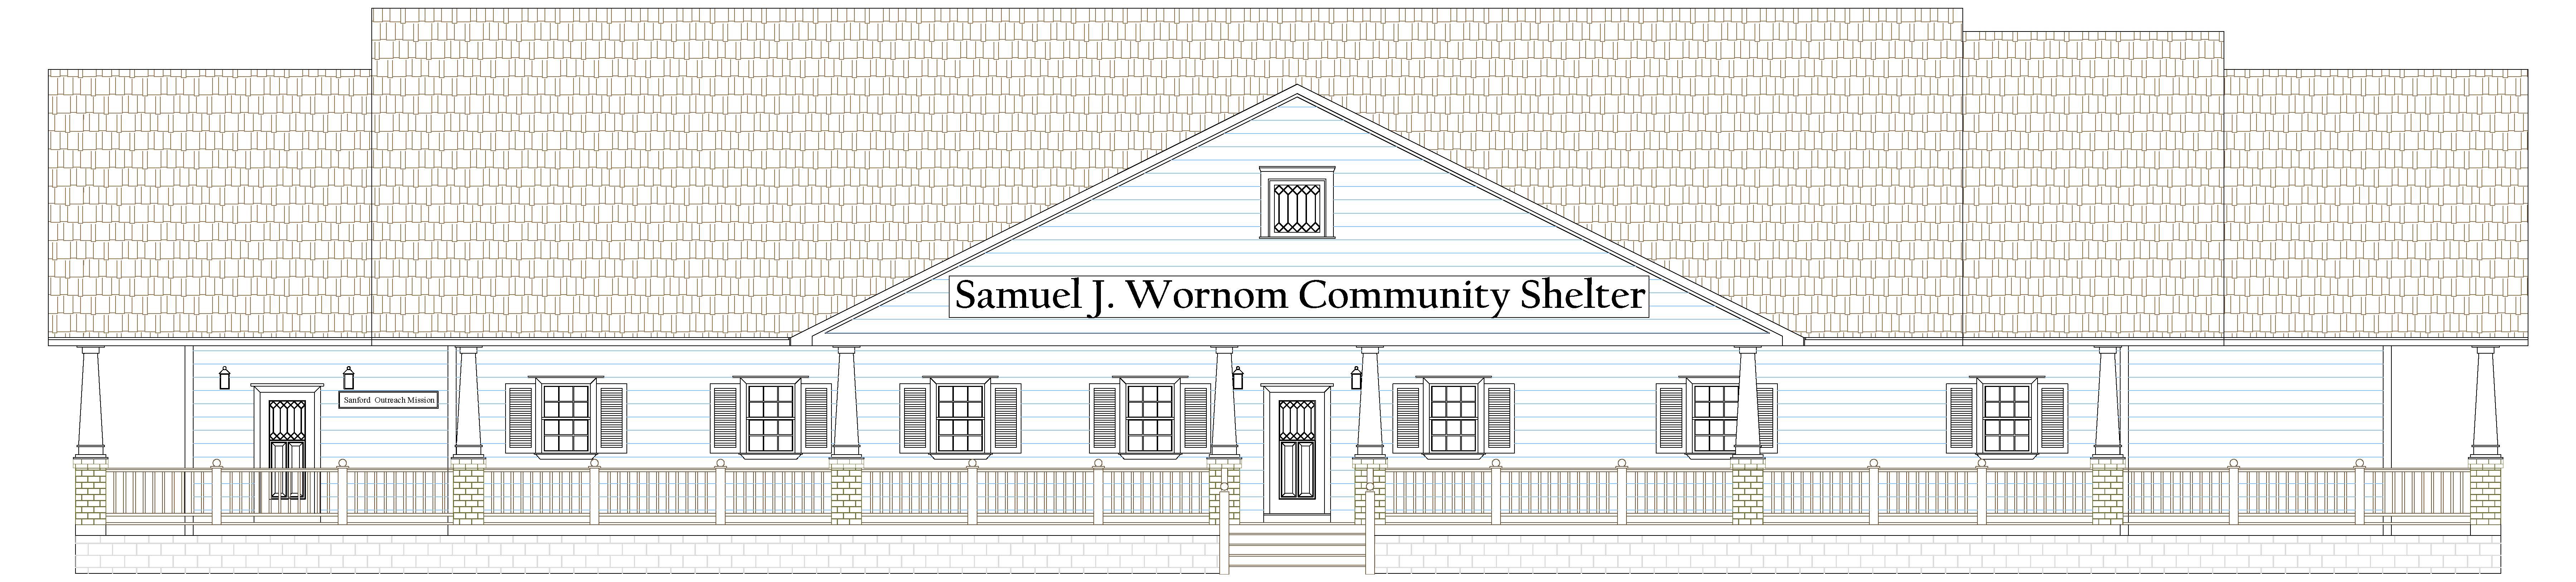 Wormon Community Shelter